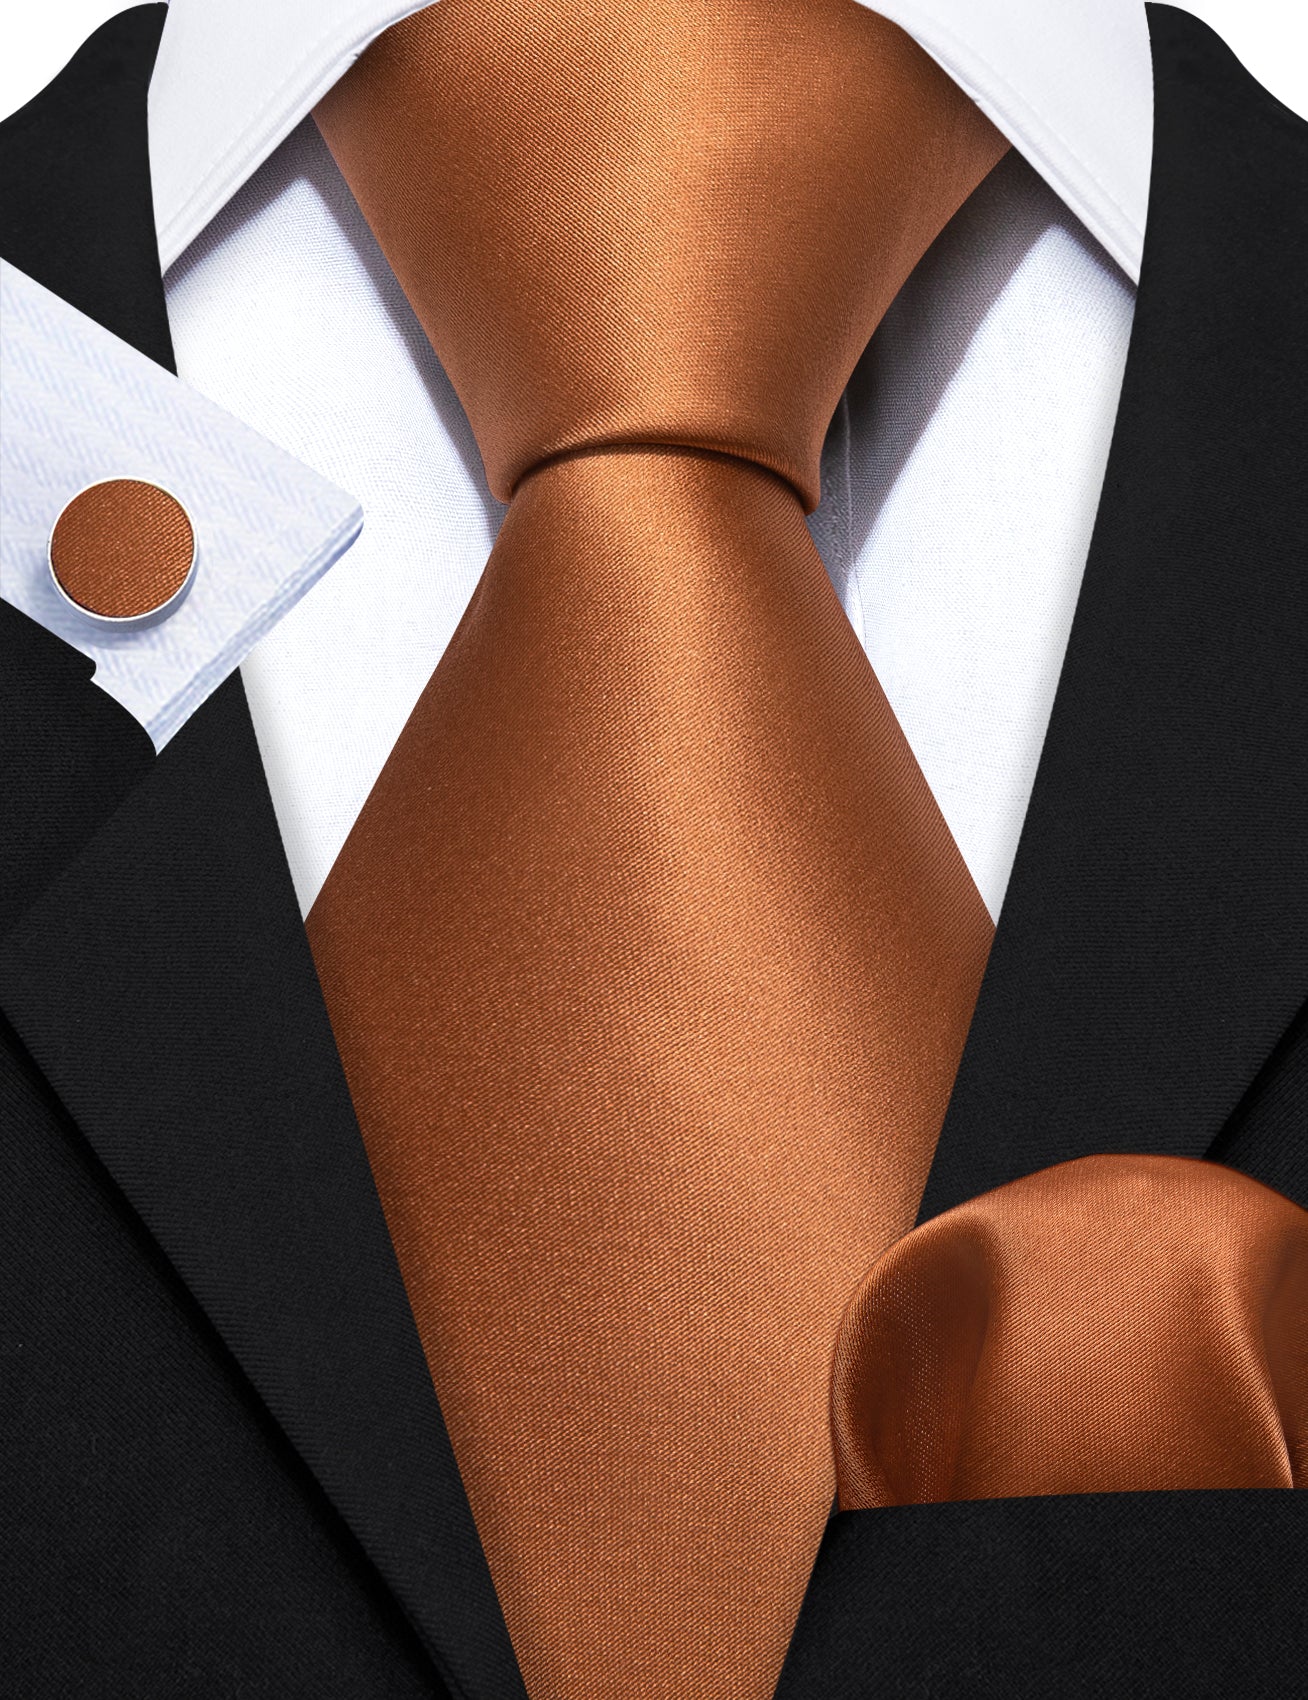 Barry.wang Men's Tie Peru Brown Solid Silk Tie Hanky Cufflinks Set